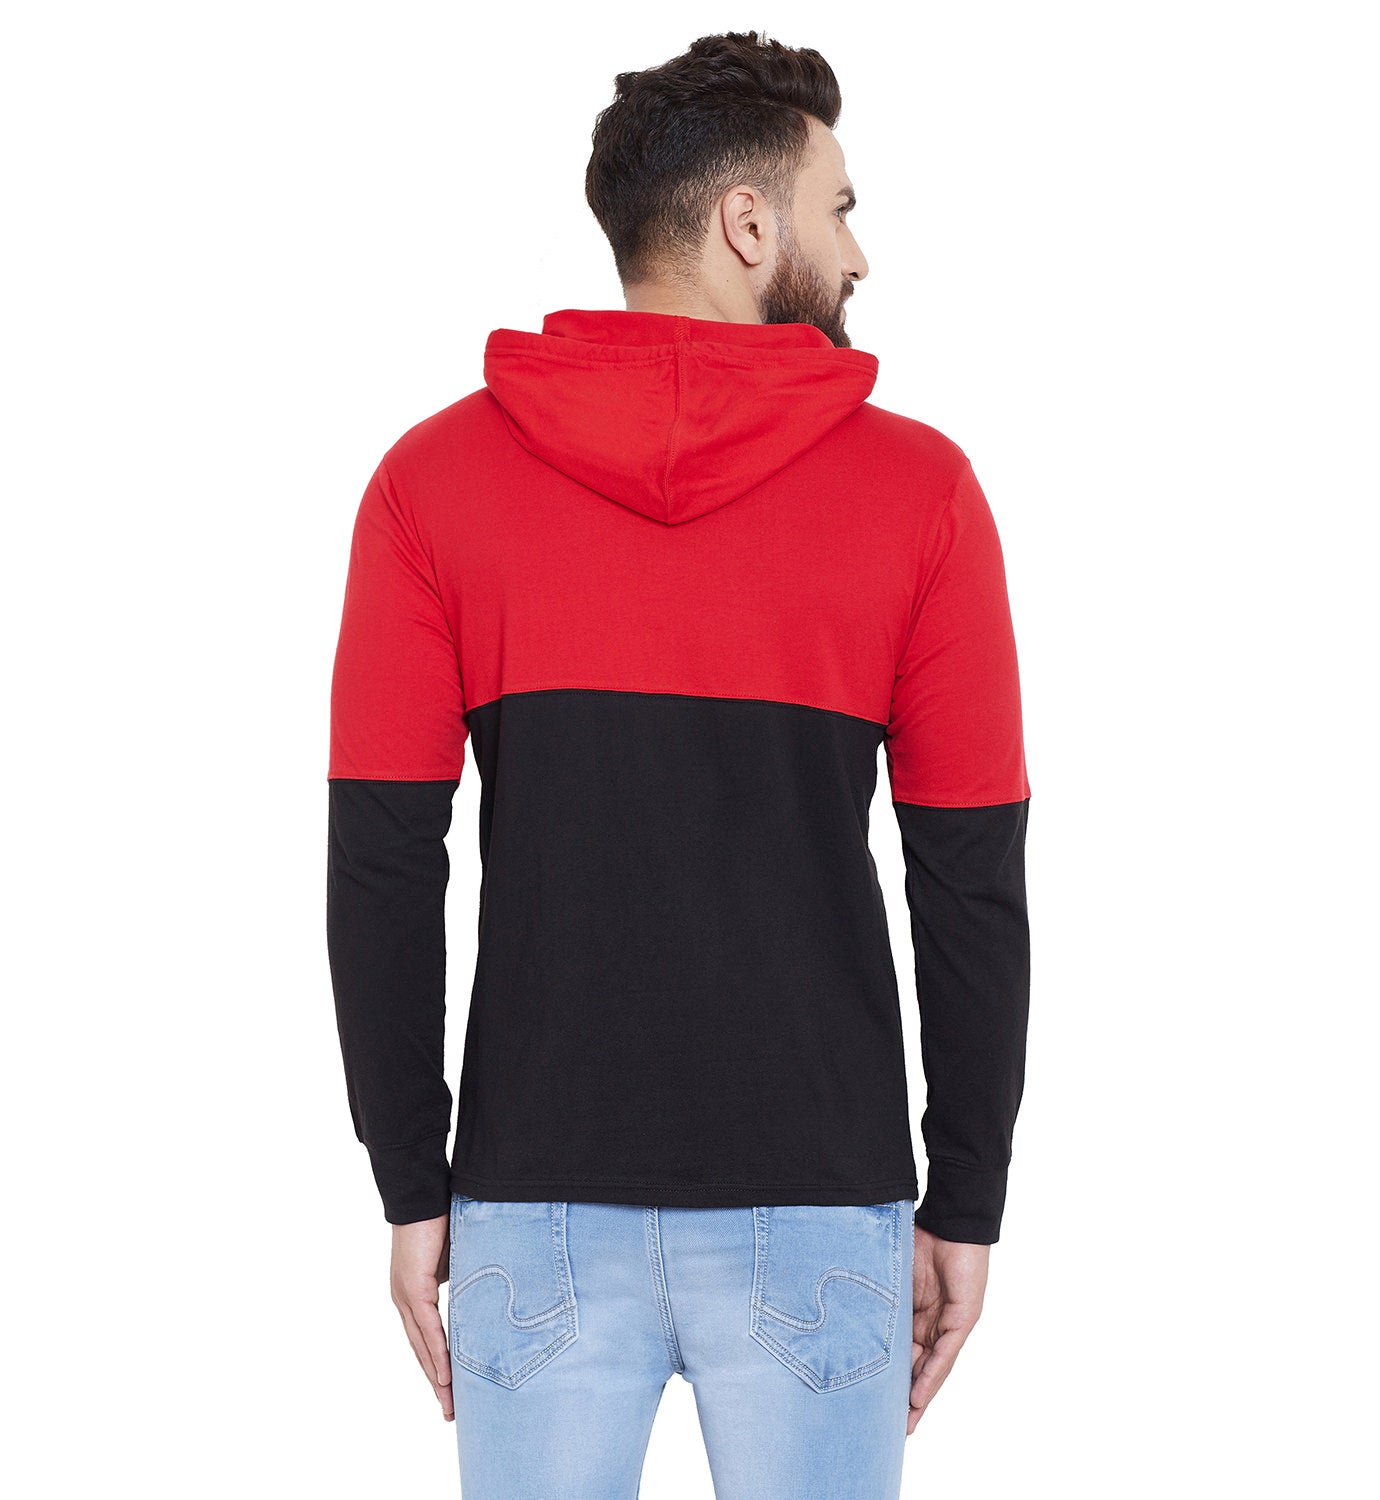 Red/Black Printed Hooded Full Sleeves T-Shirt